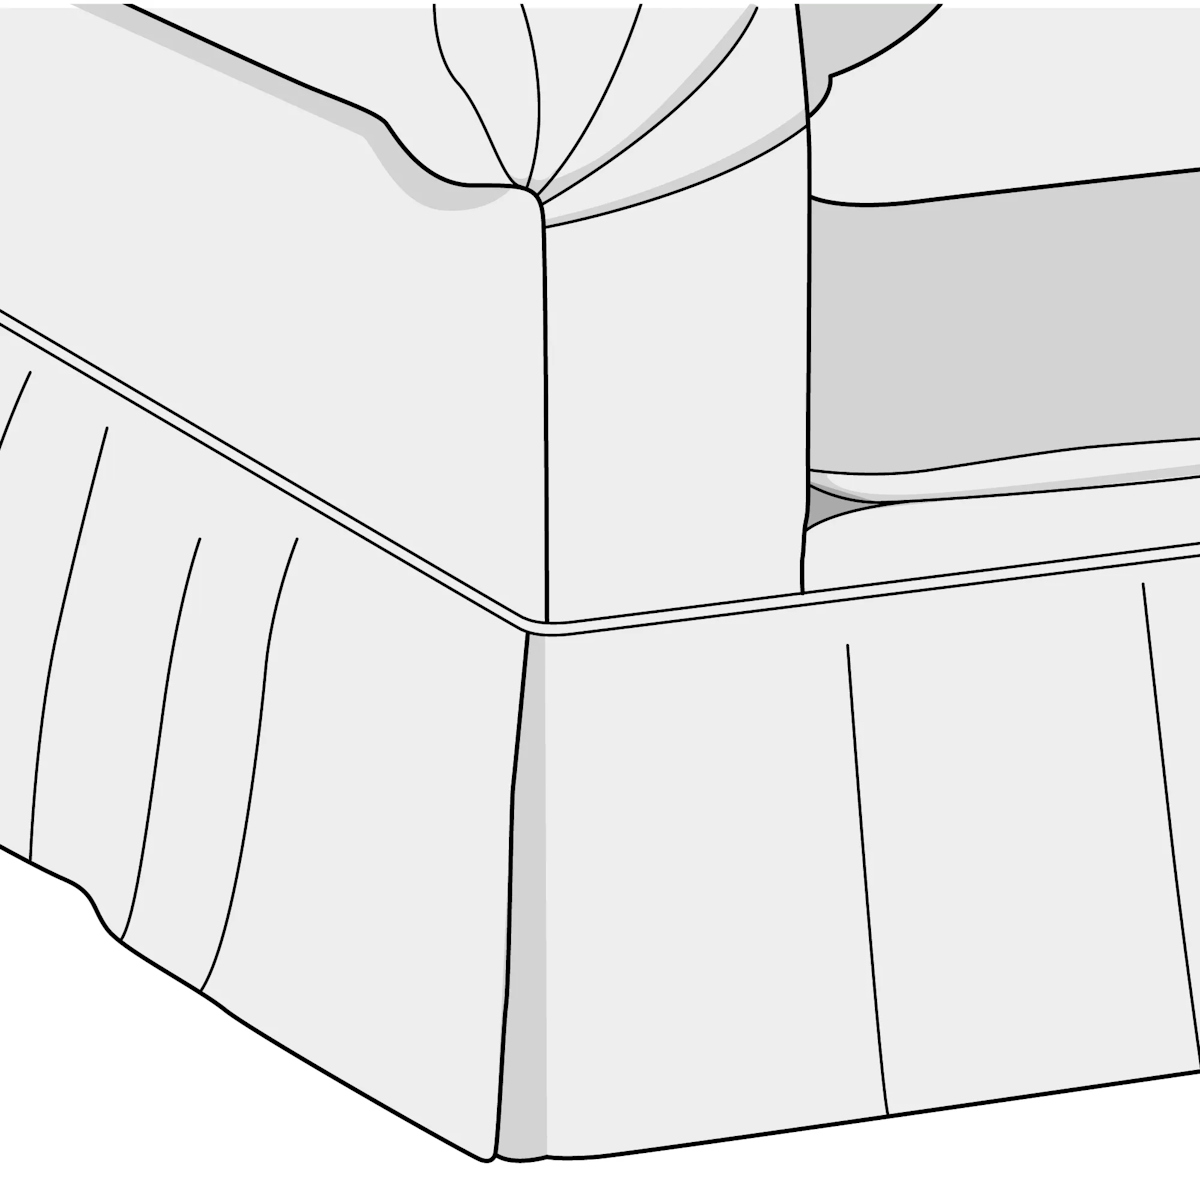 Upholstery illustration of a box pleat skirt